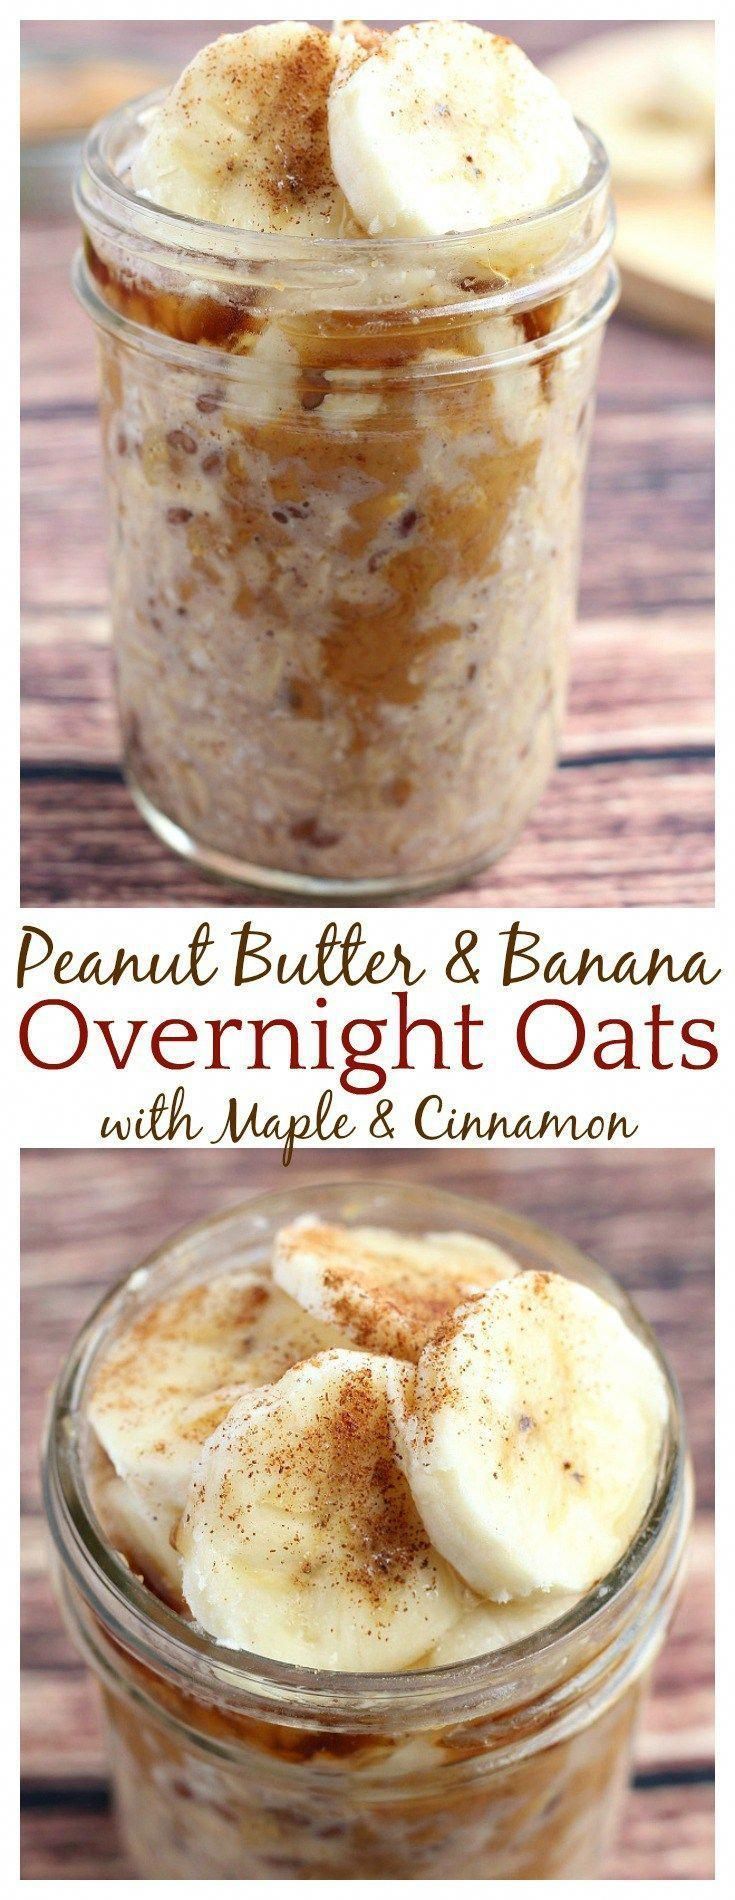 Peanut Butter and Banana Overnight Oats -   19 cake Healthy overnight oats ideas